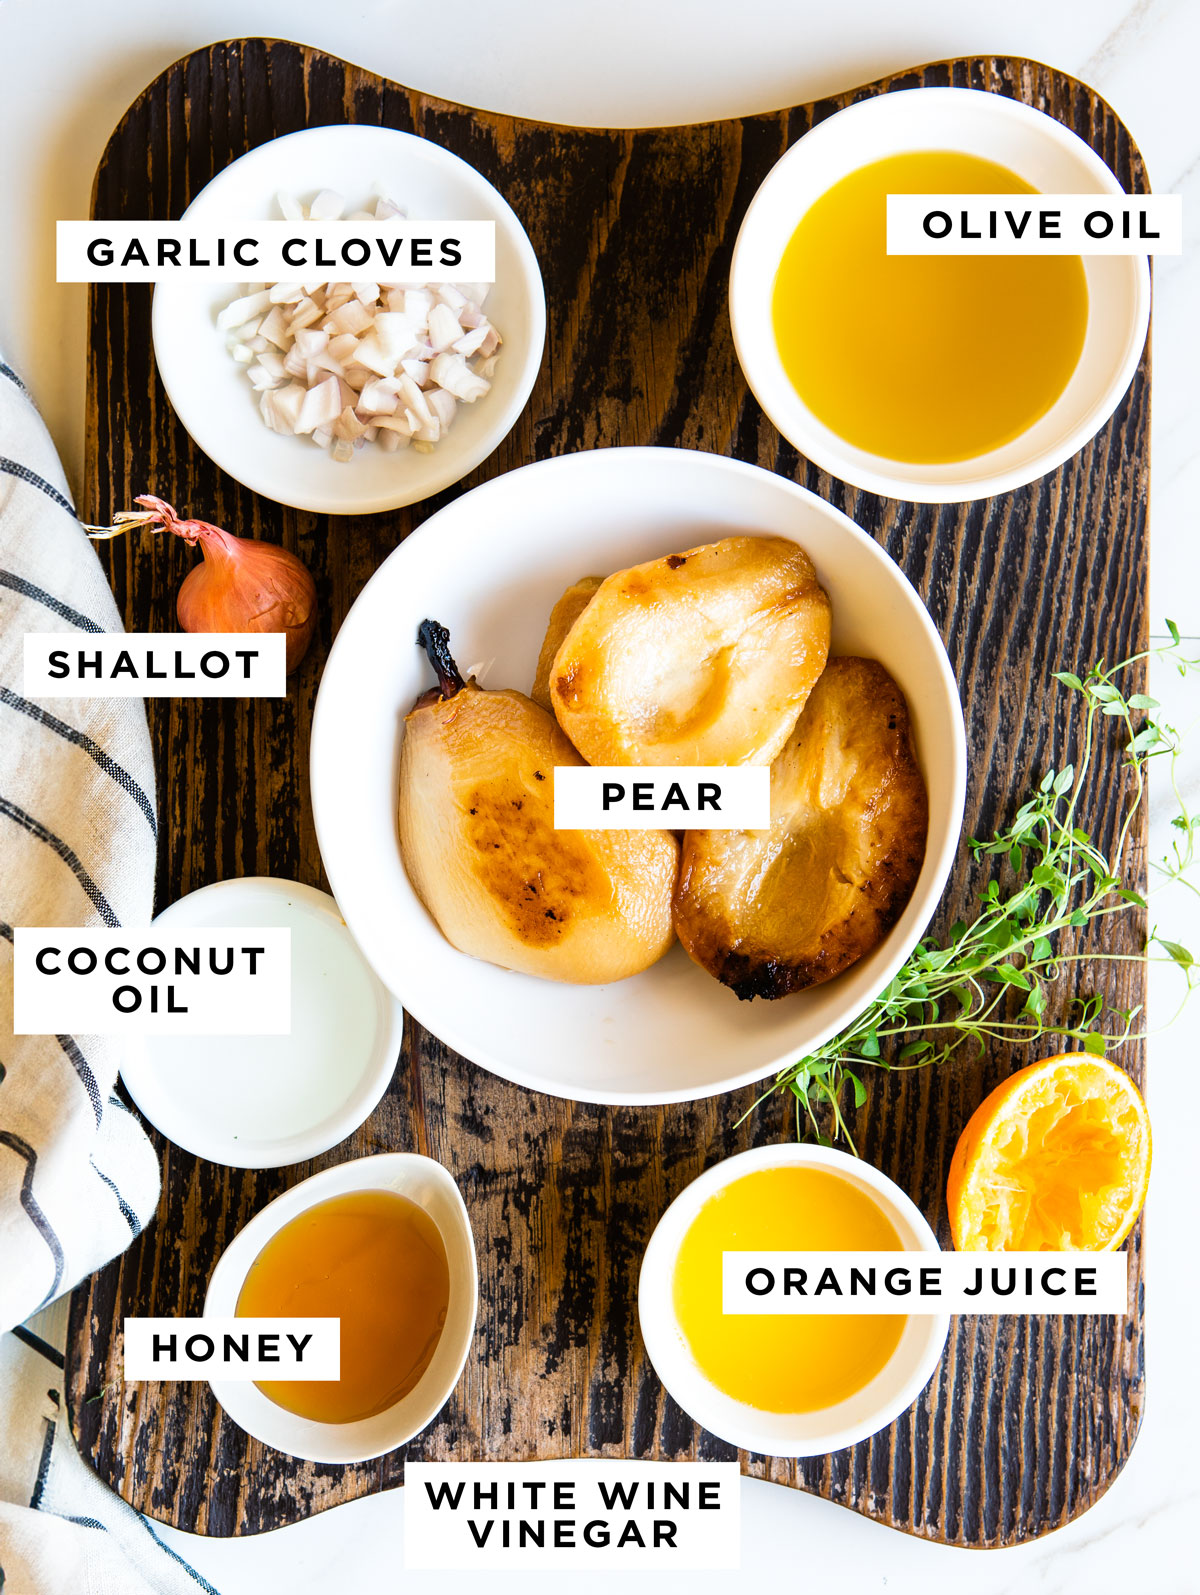 labeled ingredients for roasted pear vinaigrette including garlic cloves, olive oil, shallot, pear, coconut oil, honey, orange juice and white wine vinegar.